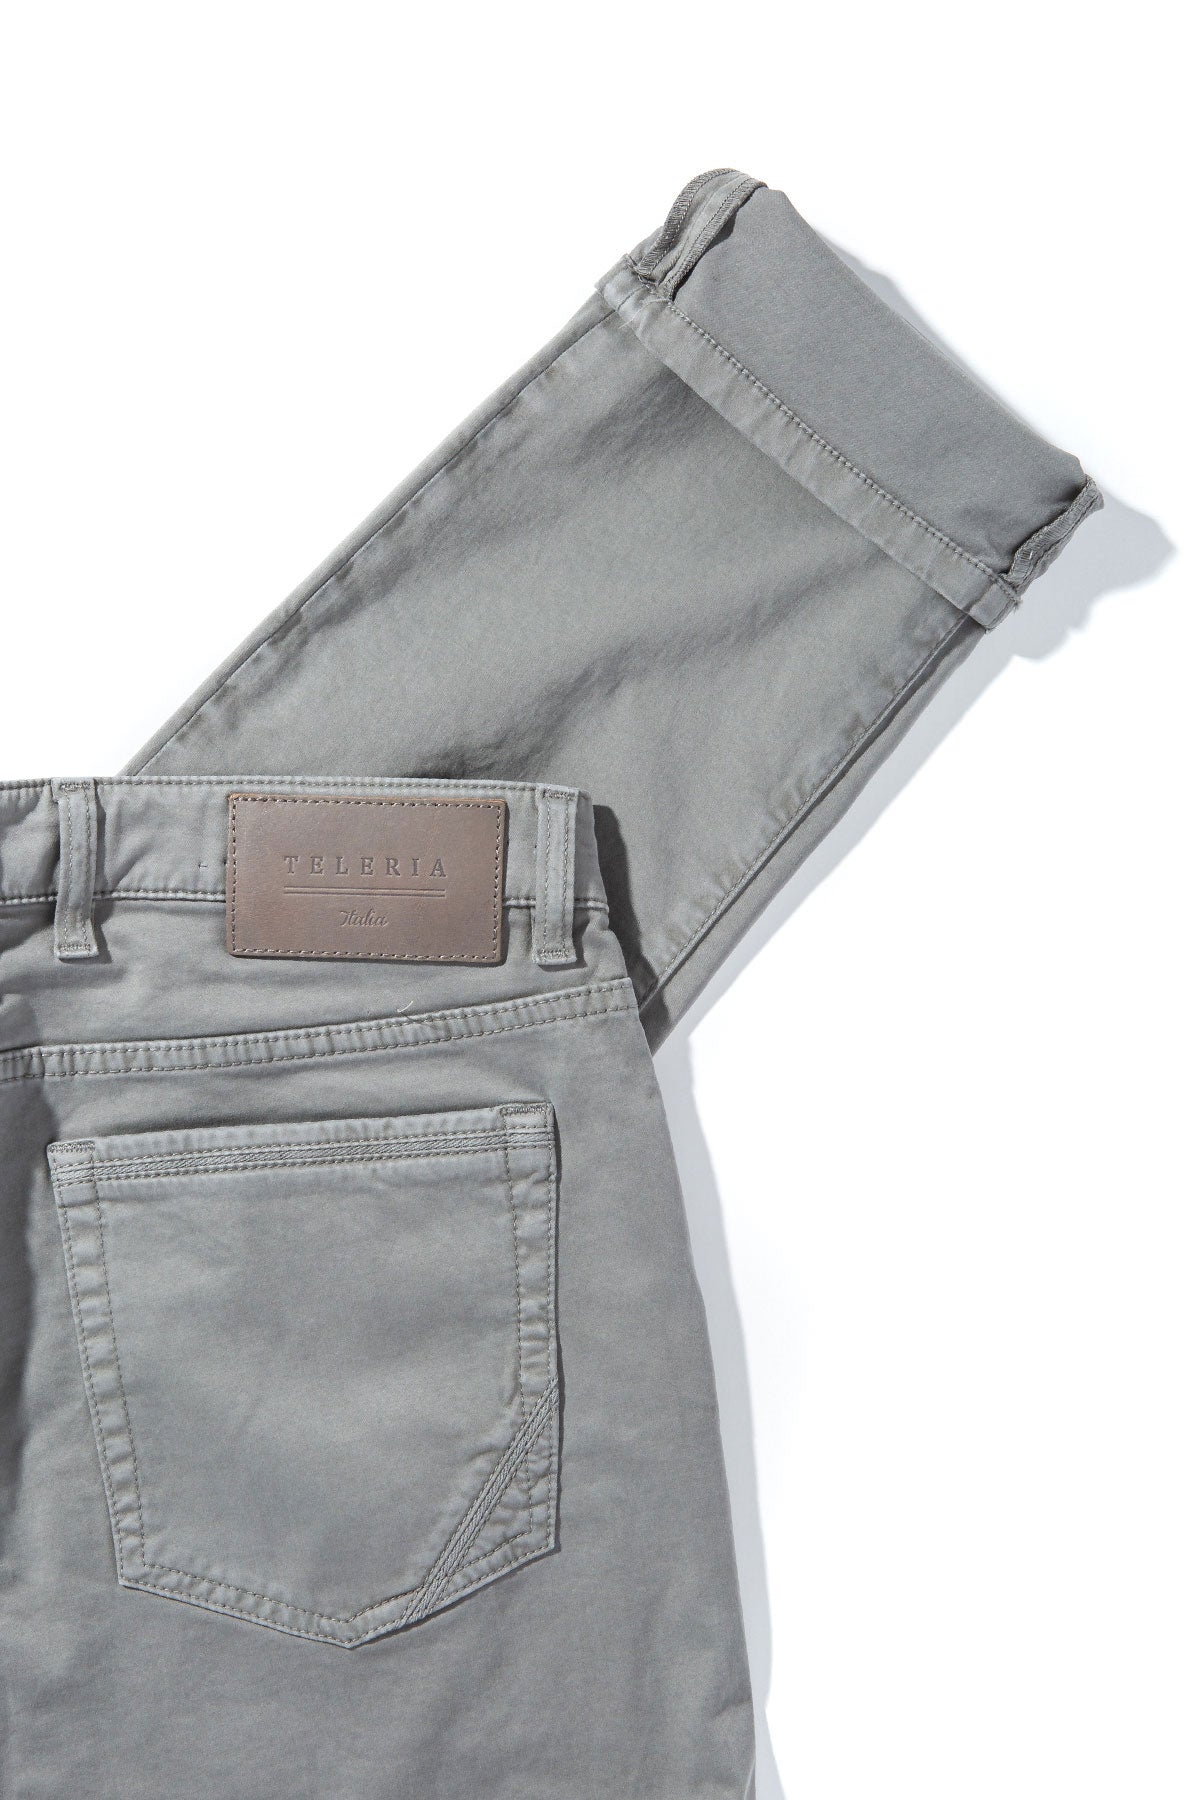 Yuma Soft Touch In Grigio | Mens - Pants - 5 Pocket | Teleria Zed